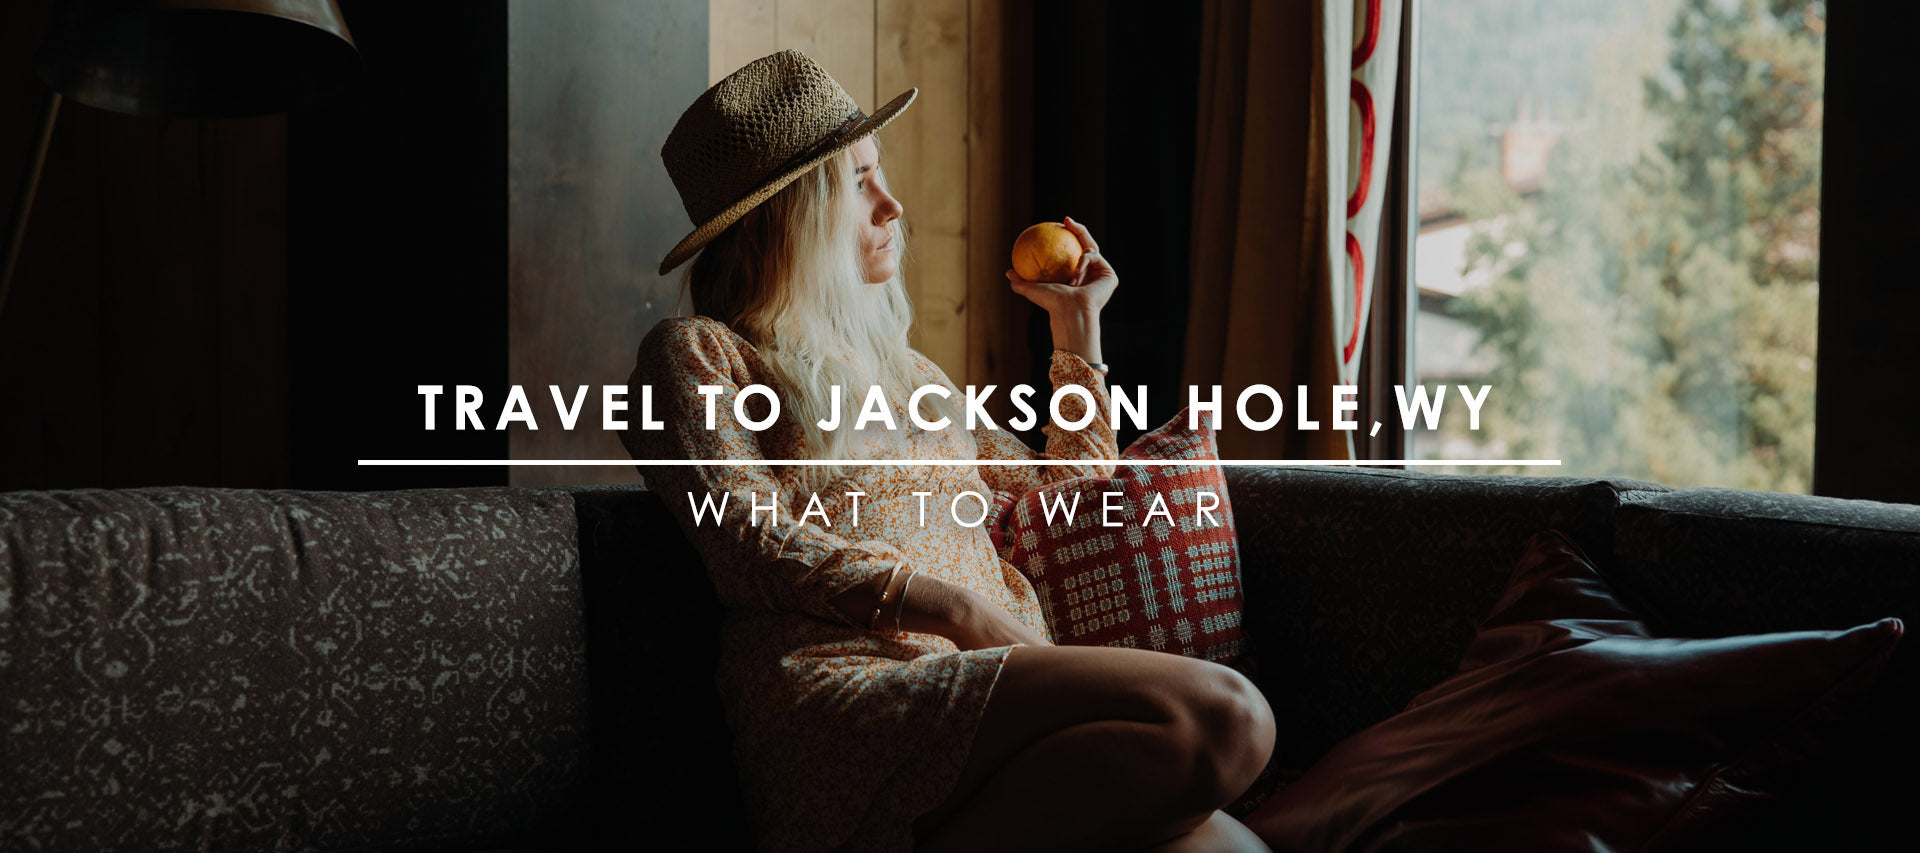 Jackson Hole Winter Fashion, US fashion